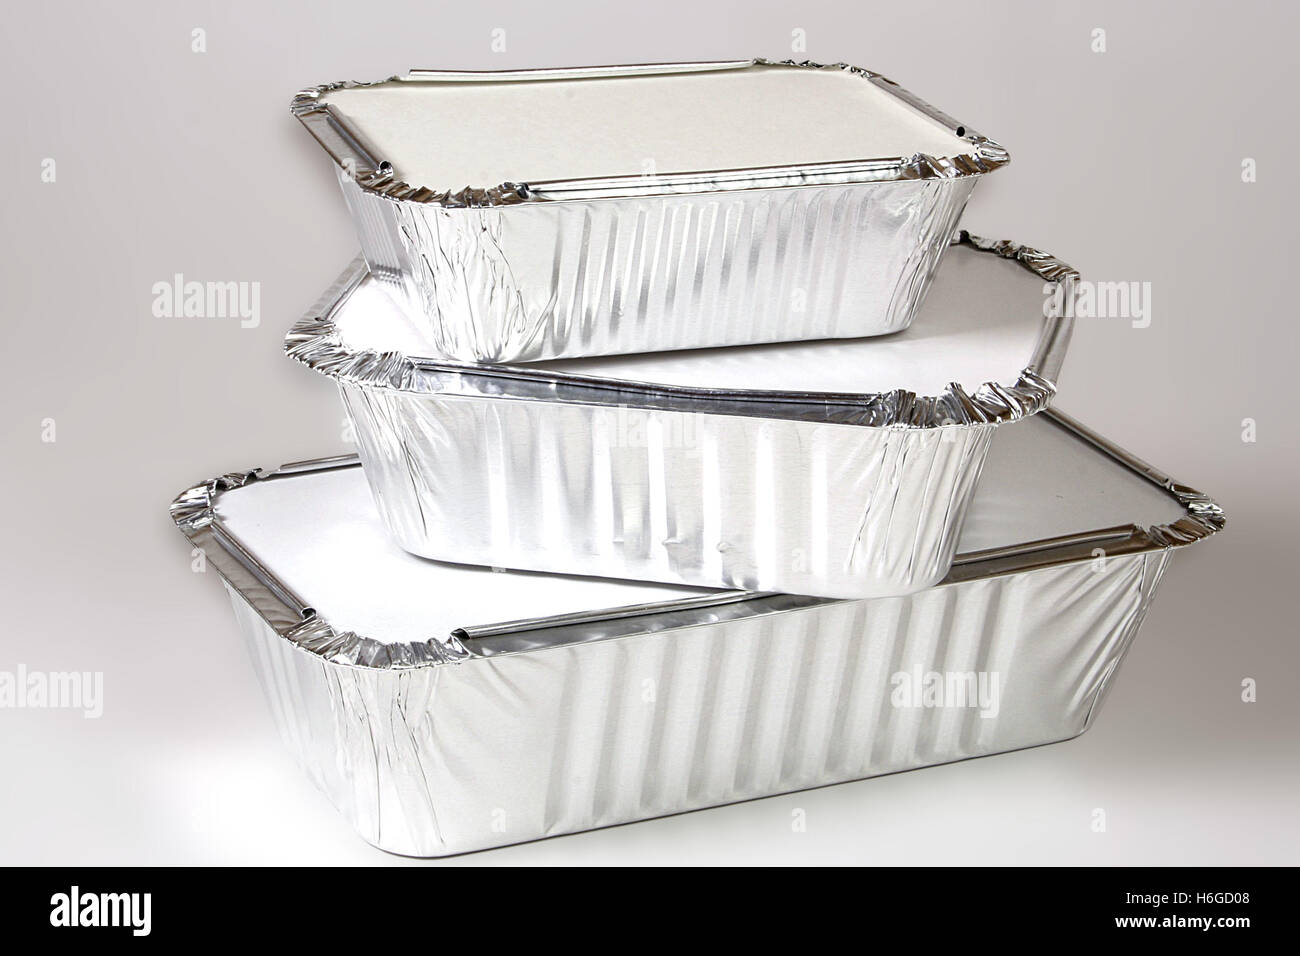 https://c8.alamy.com/comp/H6GD08/aluminium-foil-takeaway-food-containers-H6GD08.jpg